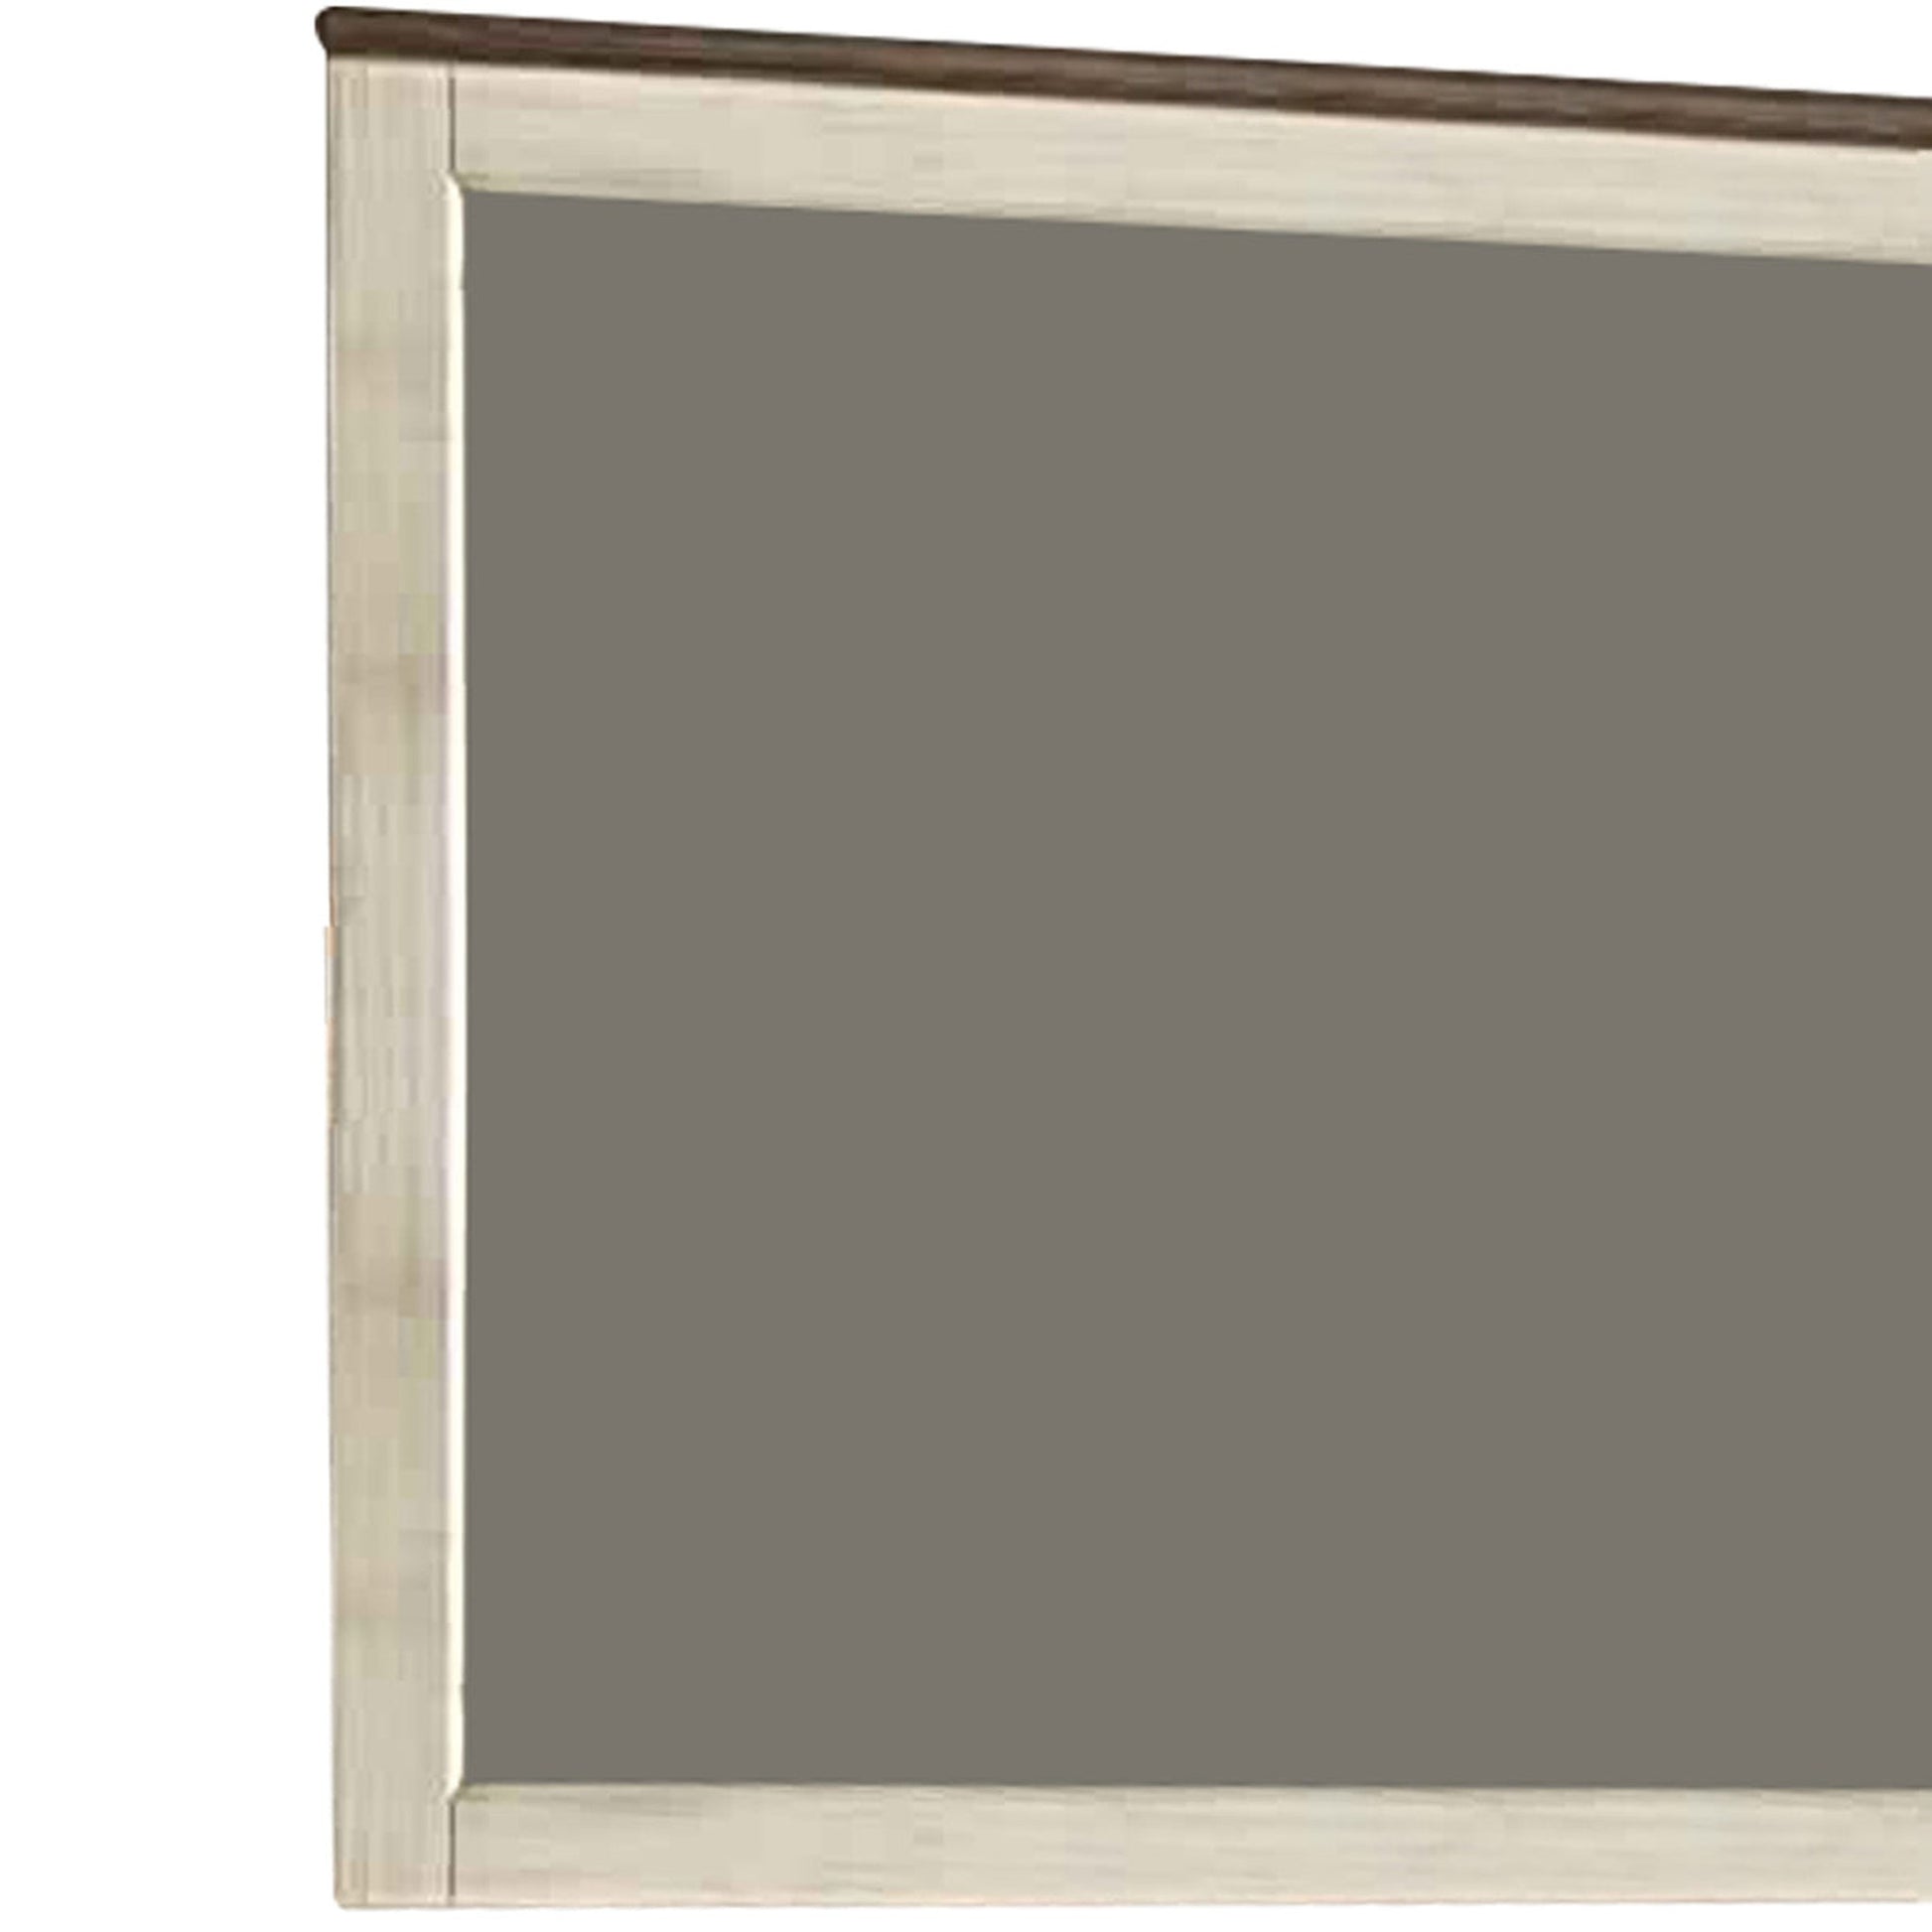 Benzara Antique White and Brown Rectangular Wood Frame Mirror With Textured Detail